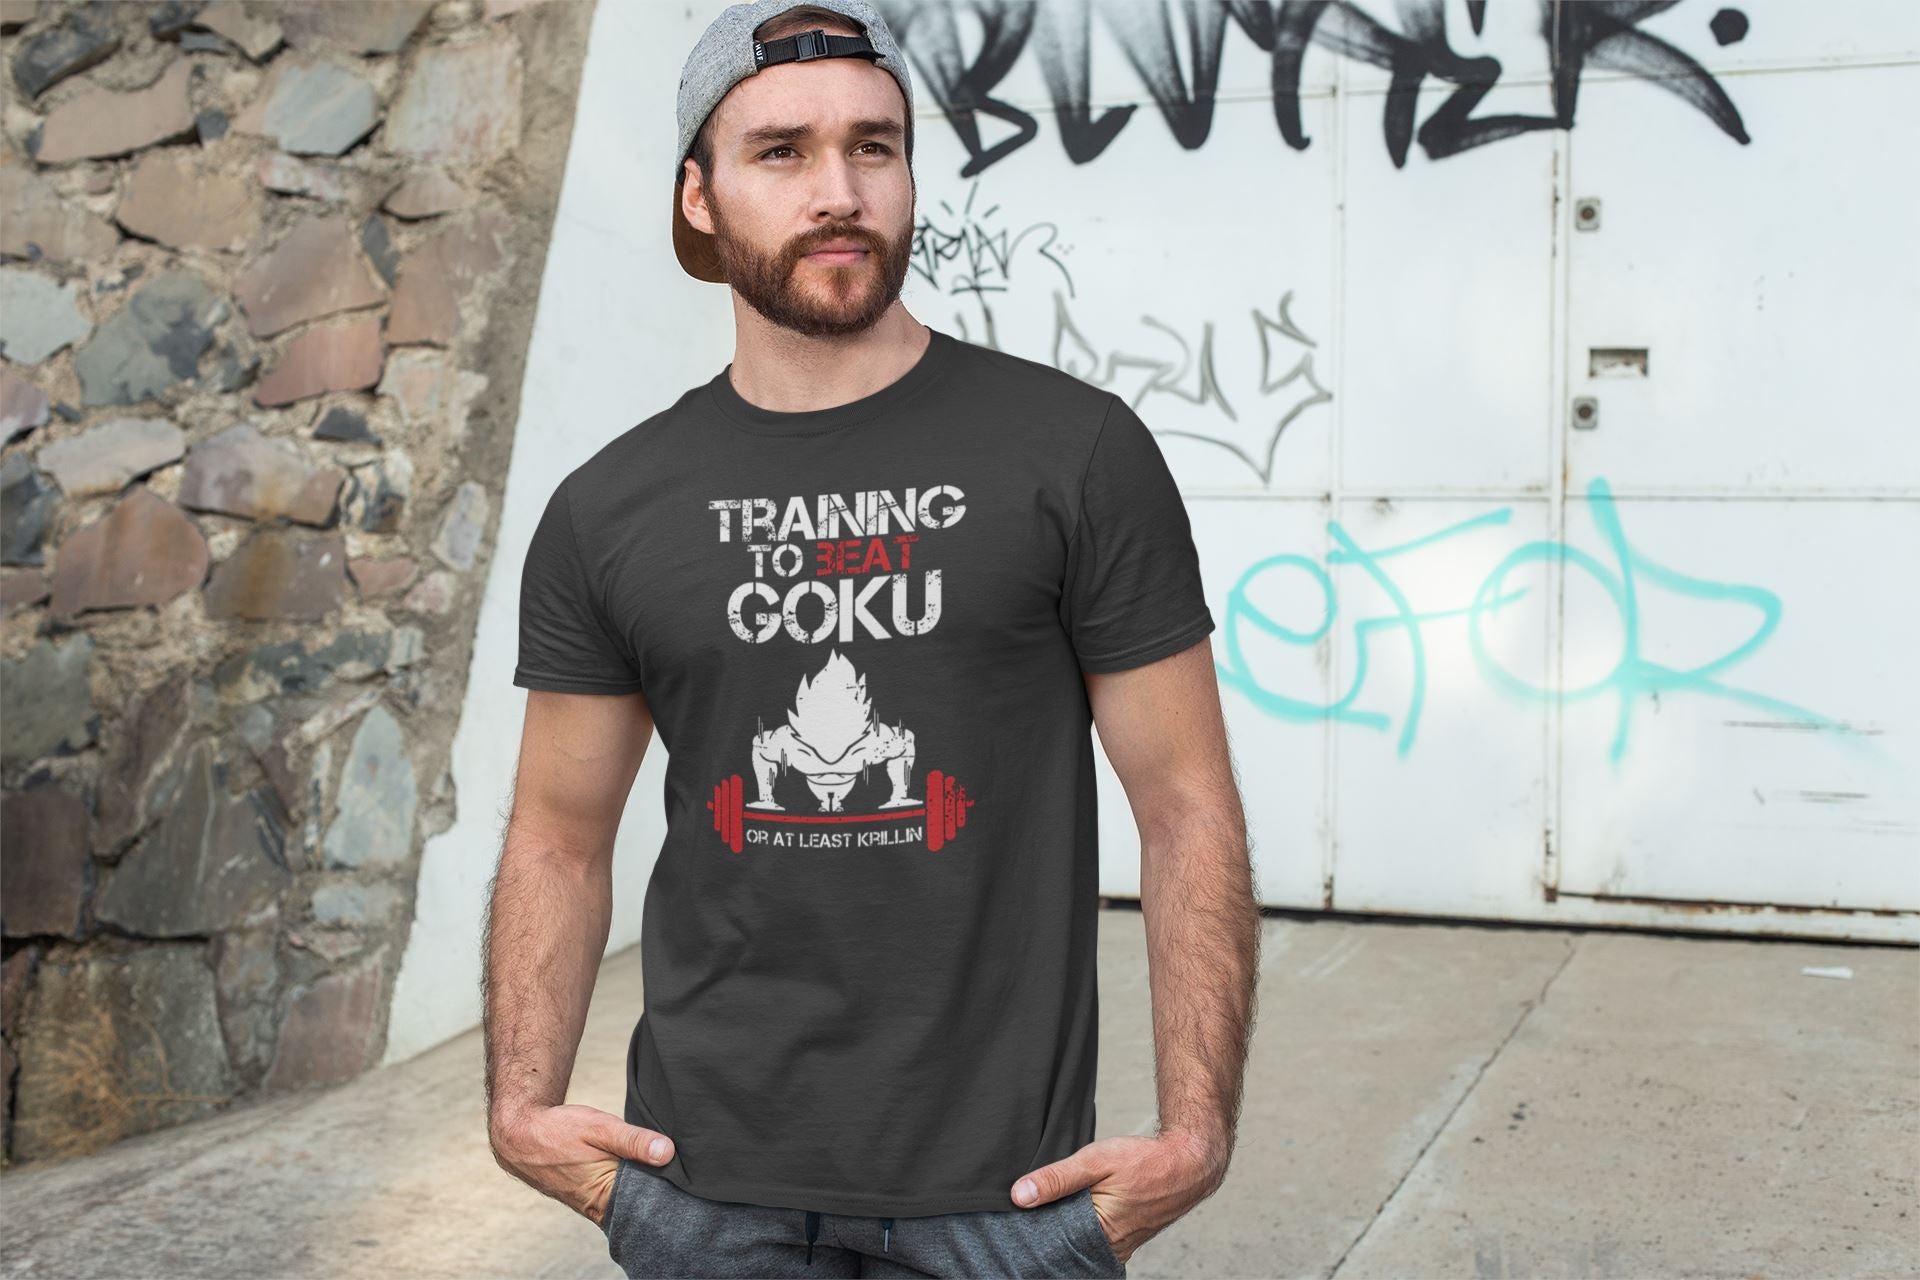 Training to Beat Goku or Atleast Krillin Exclusive Gymwear T Shirt for Men freeshipping - Catch My Drift India